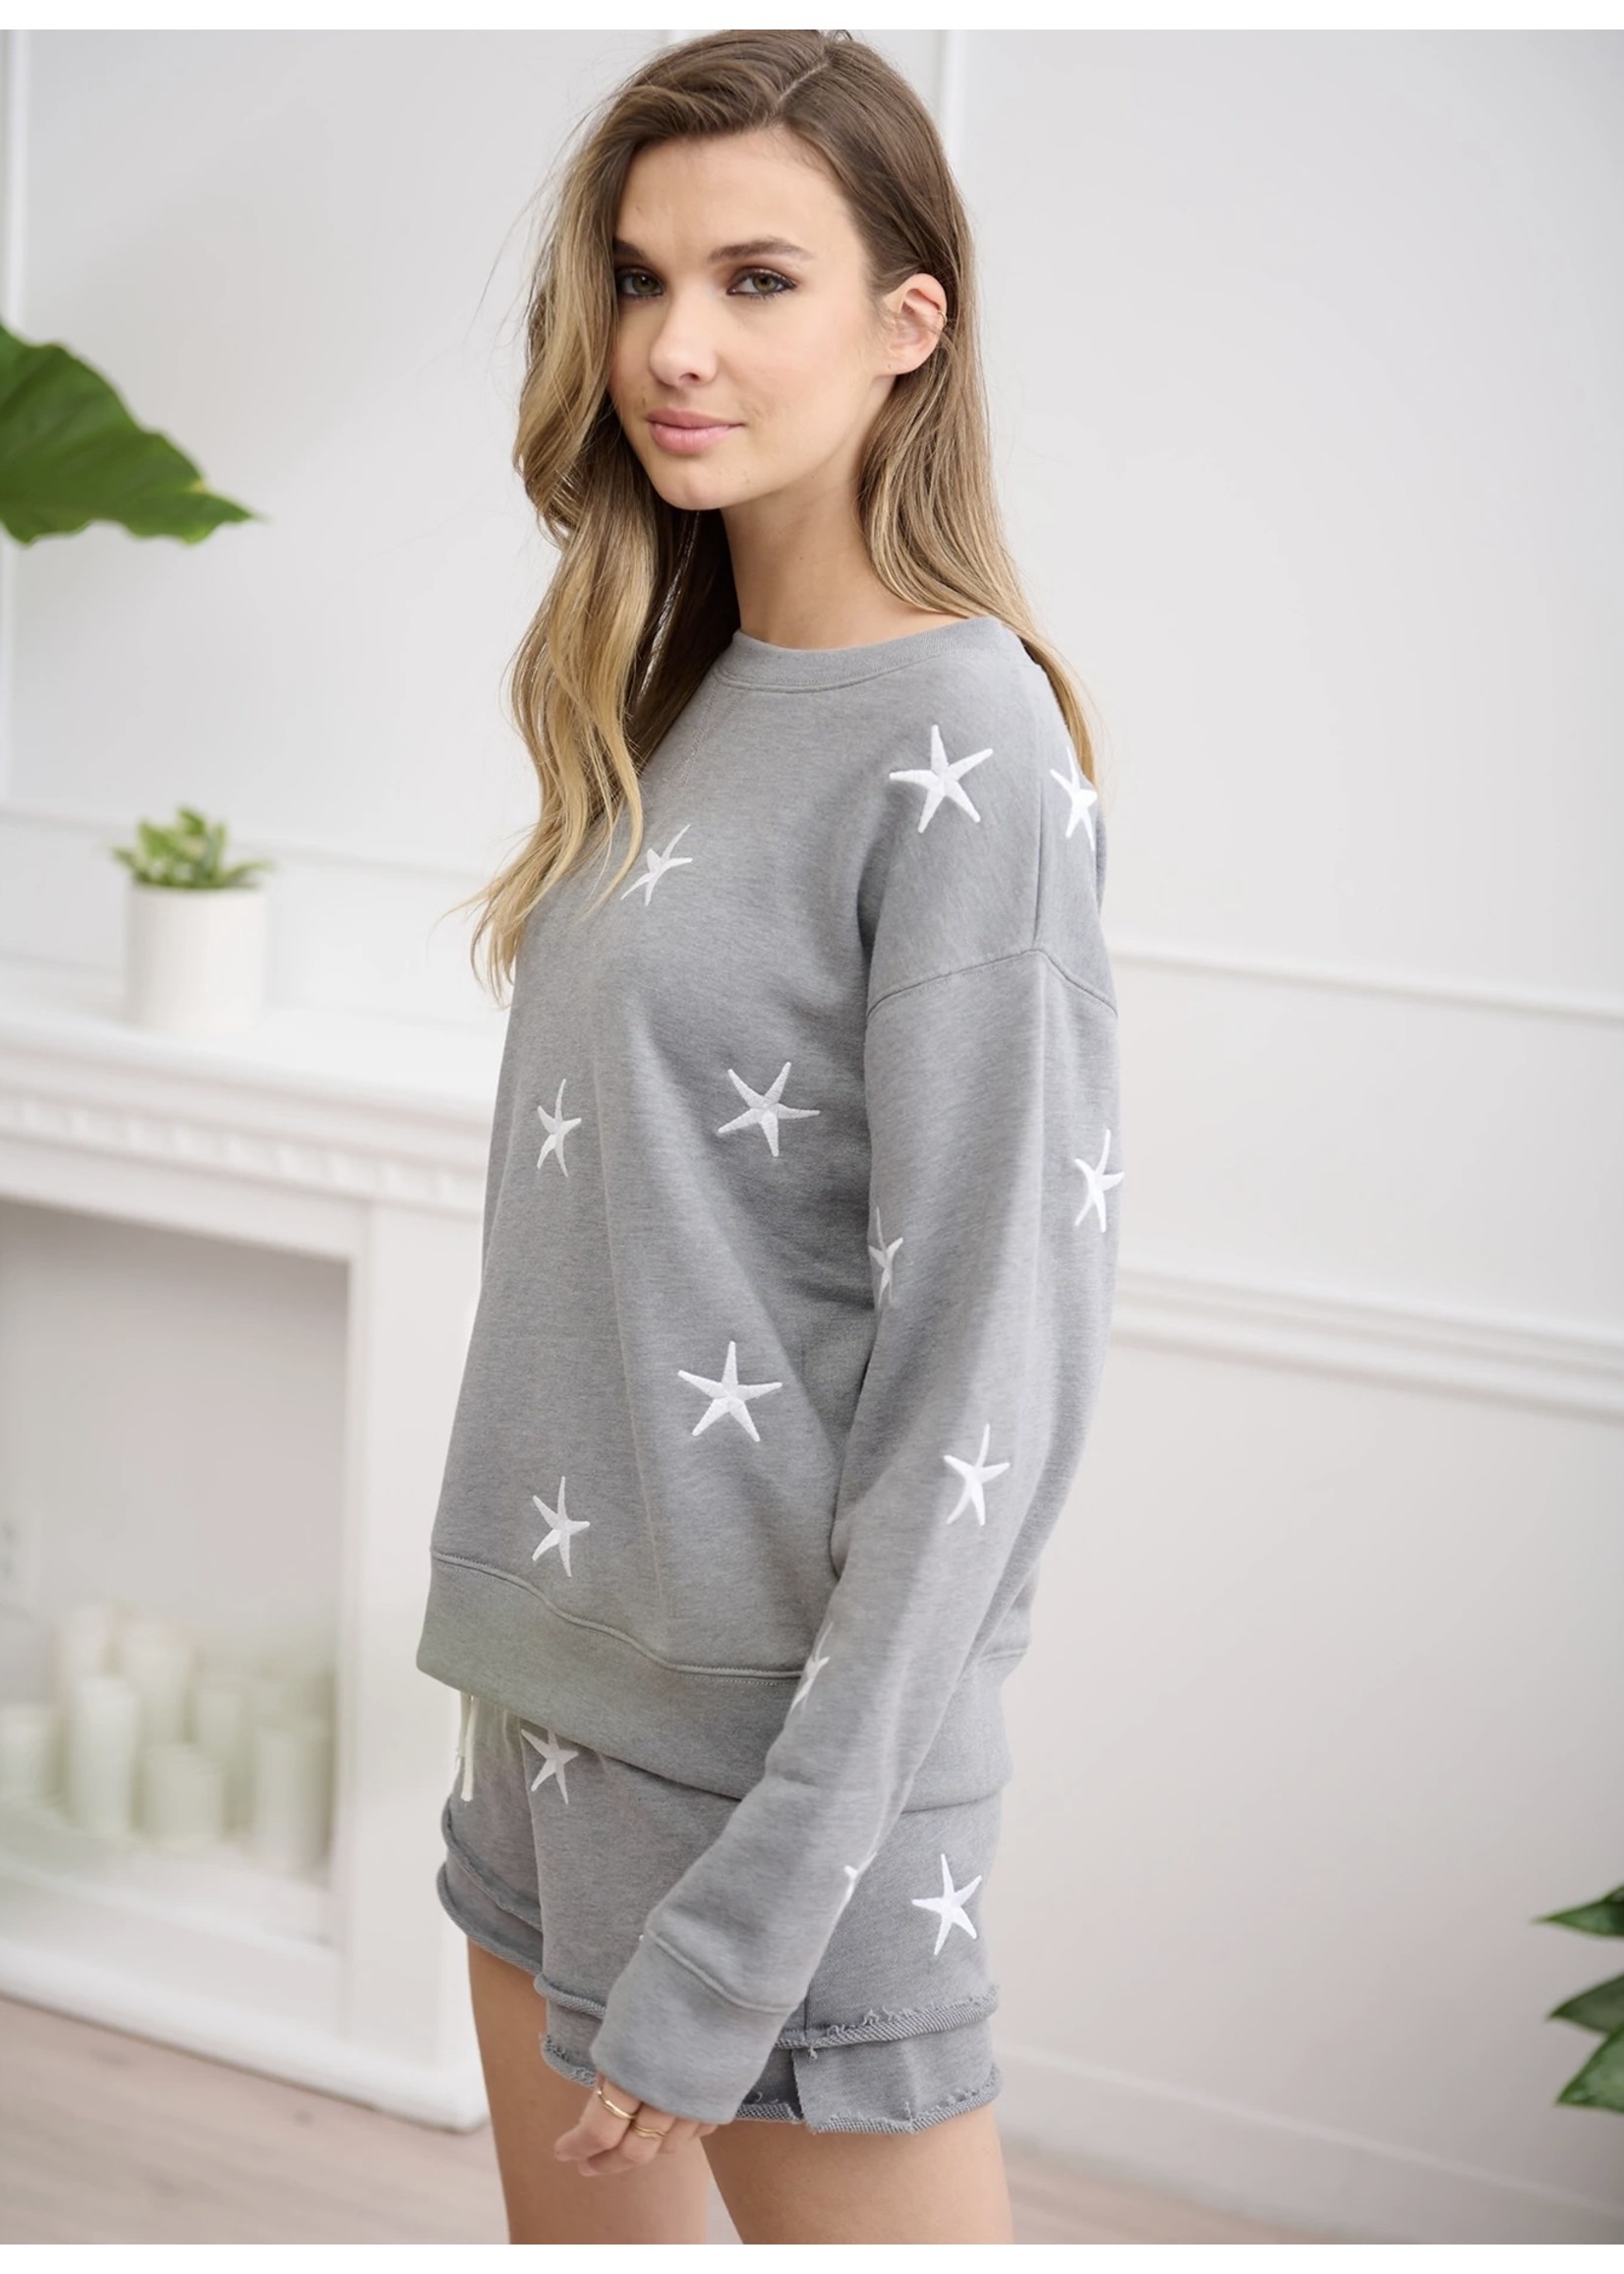 CHRLDR CHRLDR - Embroidered Stars - Crew Neck Sweatshirt